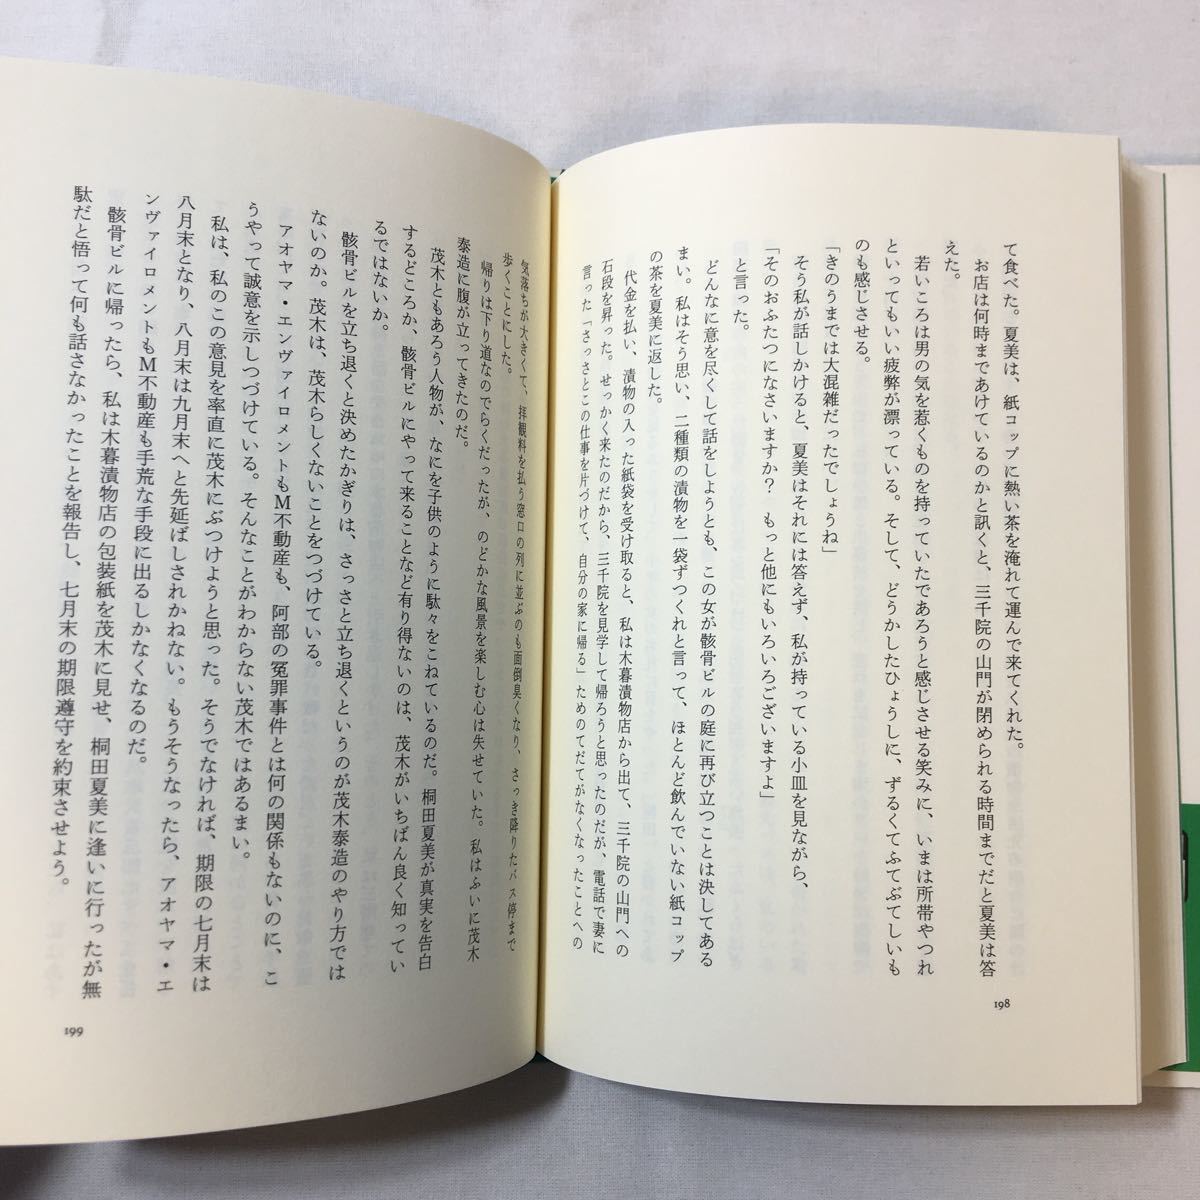 zaa-344! каркас Bill. двор ( сверху )* ( внизу ) 2 шт. комплект монография 2009/6/19 Miyamoto Teru ( работа )